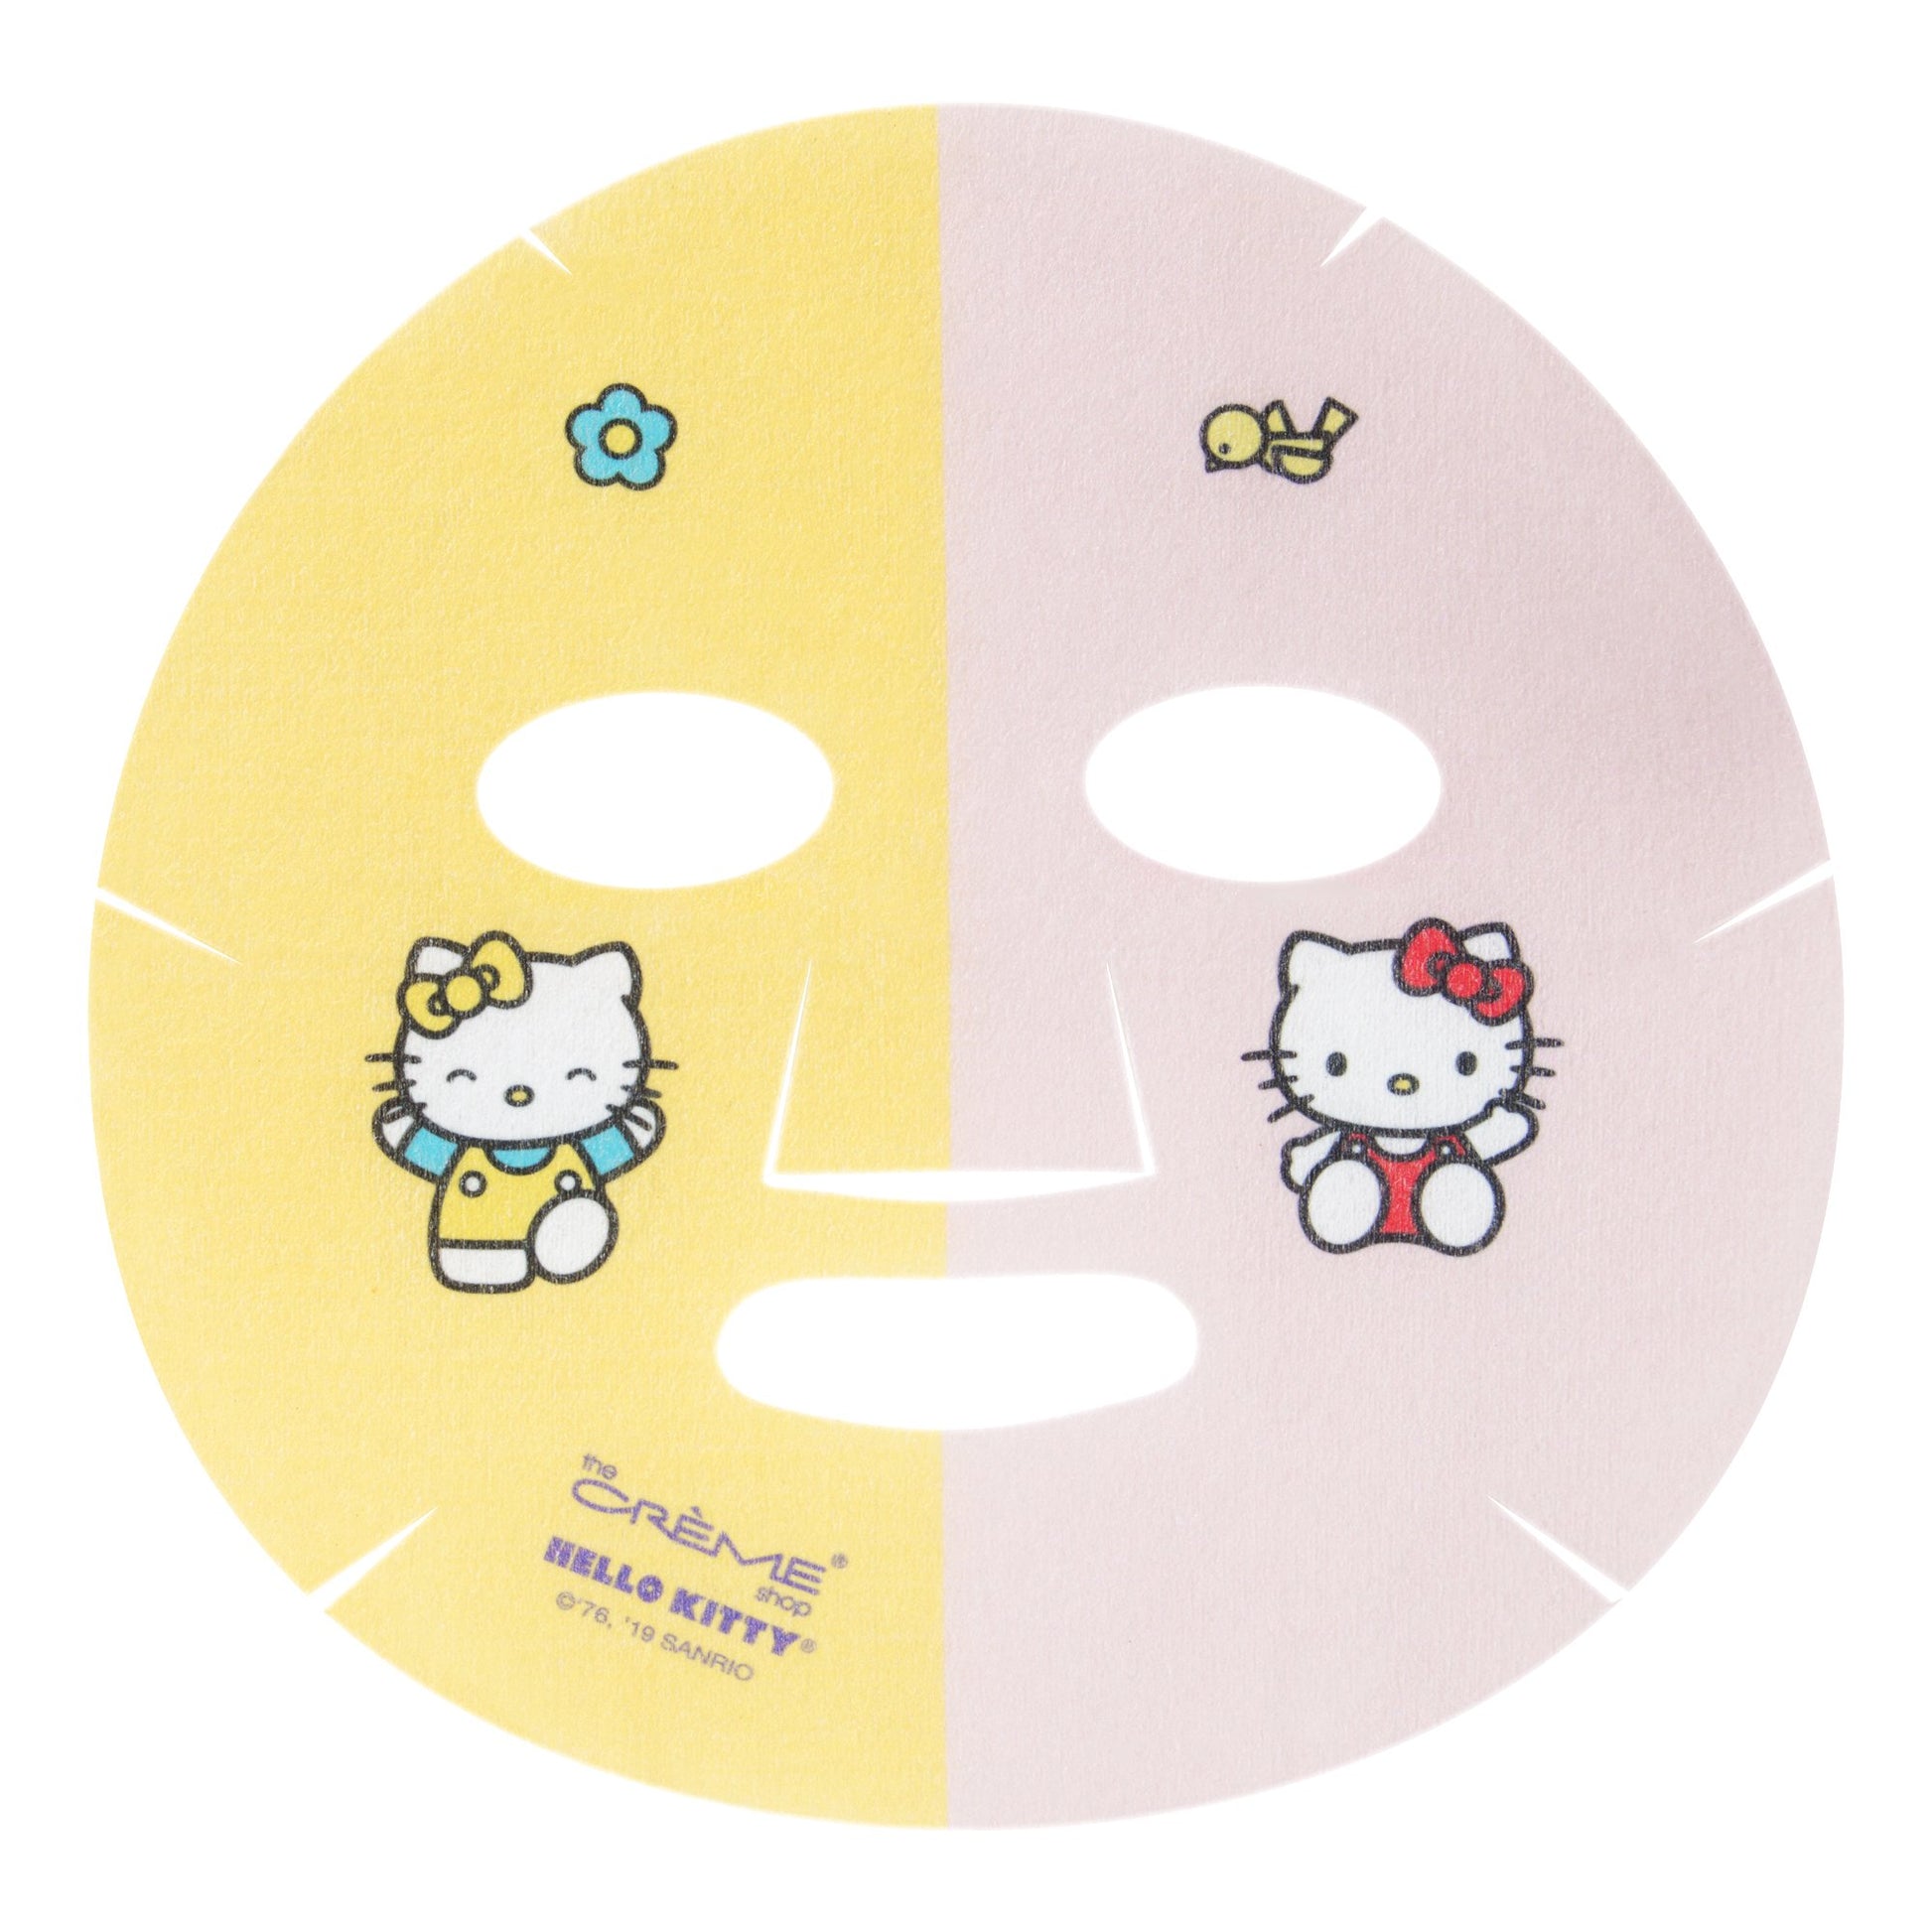 Hello Kitty & Mimi Pineapple & Hyaluronic Acid Fusion Sheet Mask - The Crème Shop